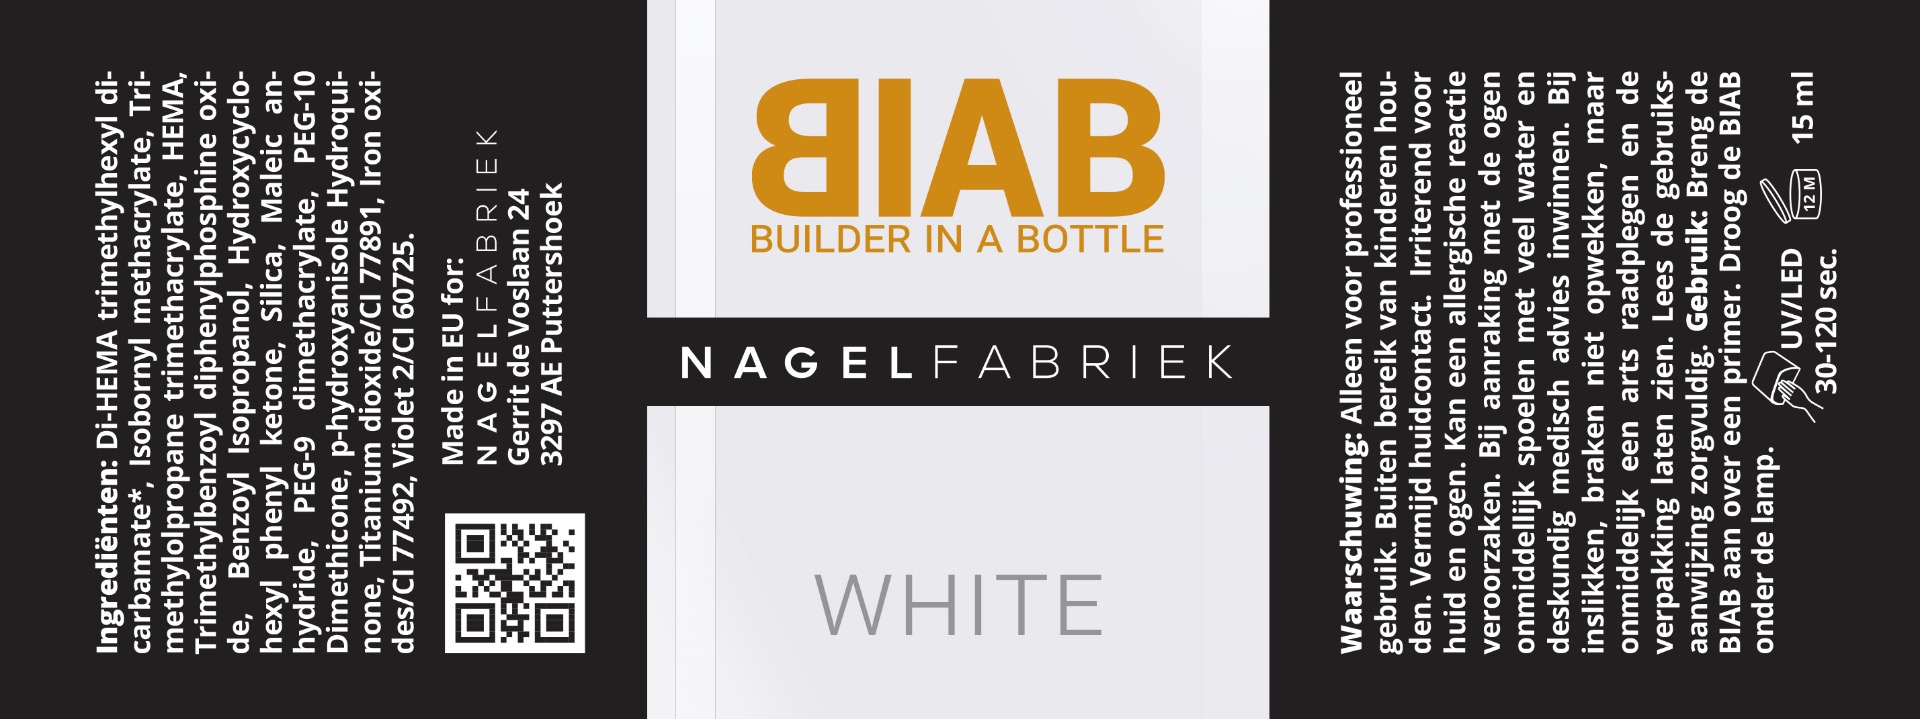 Label Builder In a Bottle White - BIAB